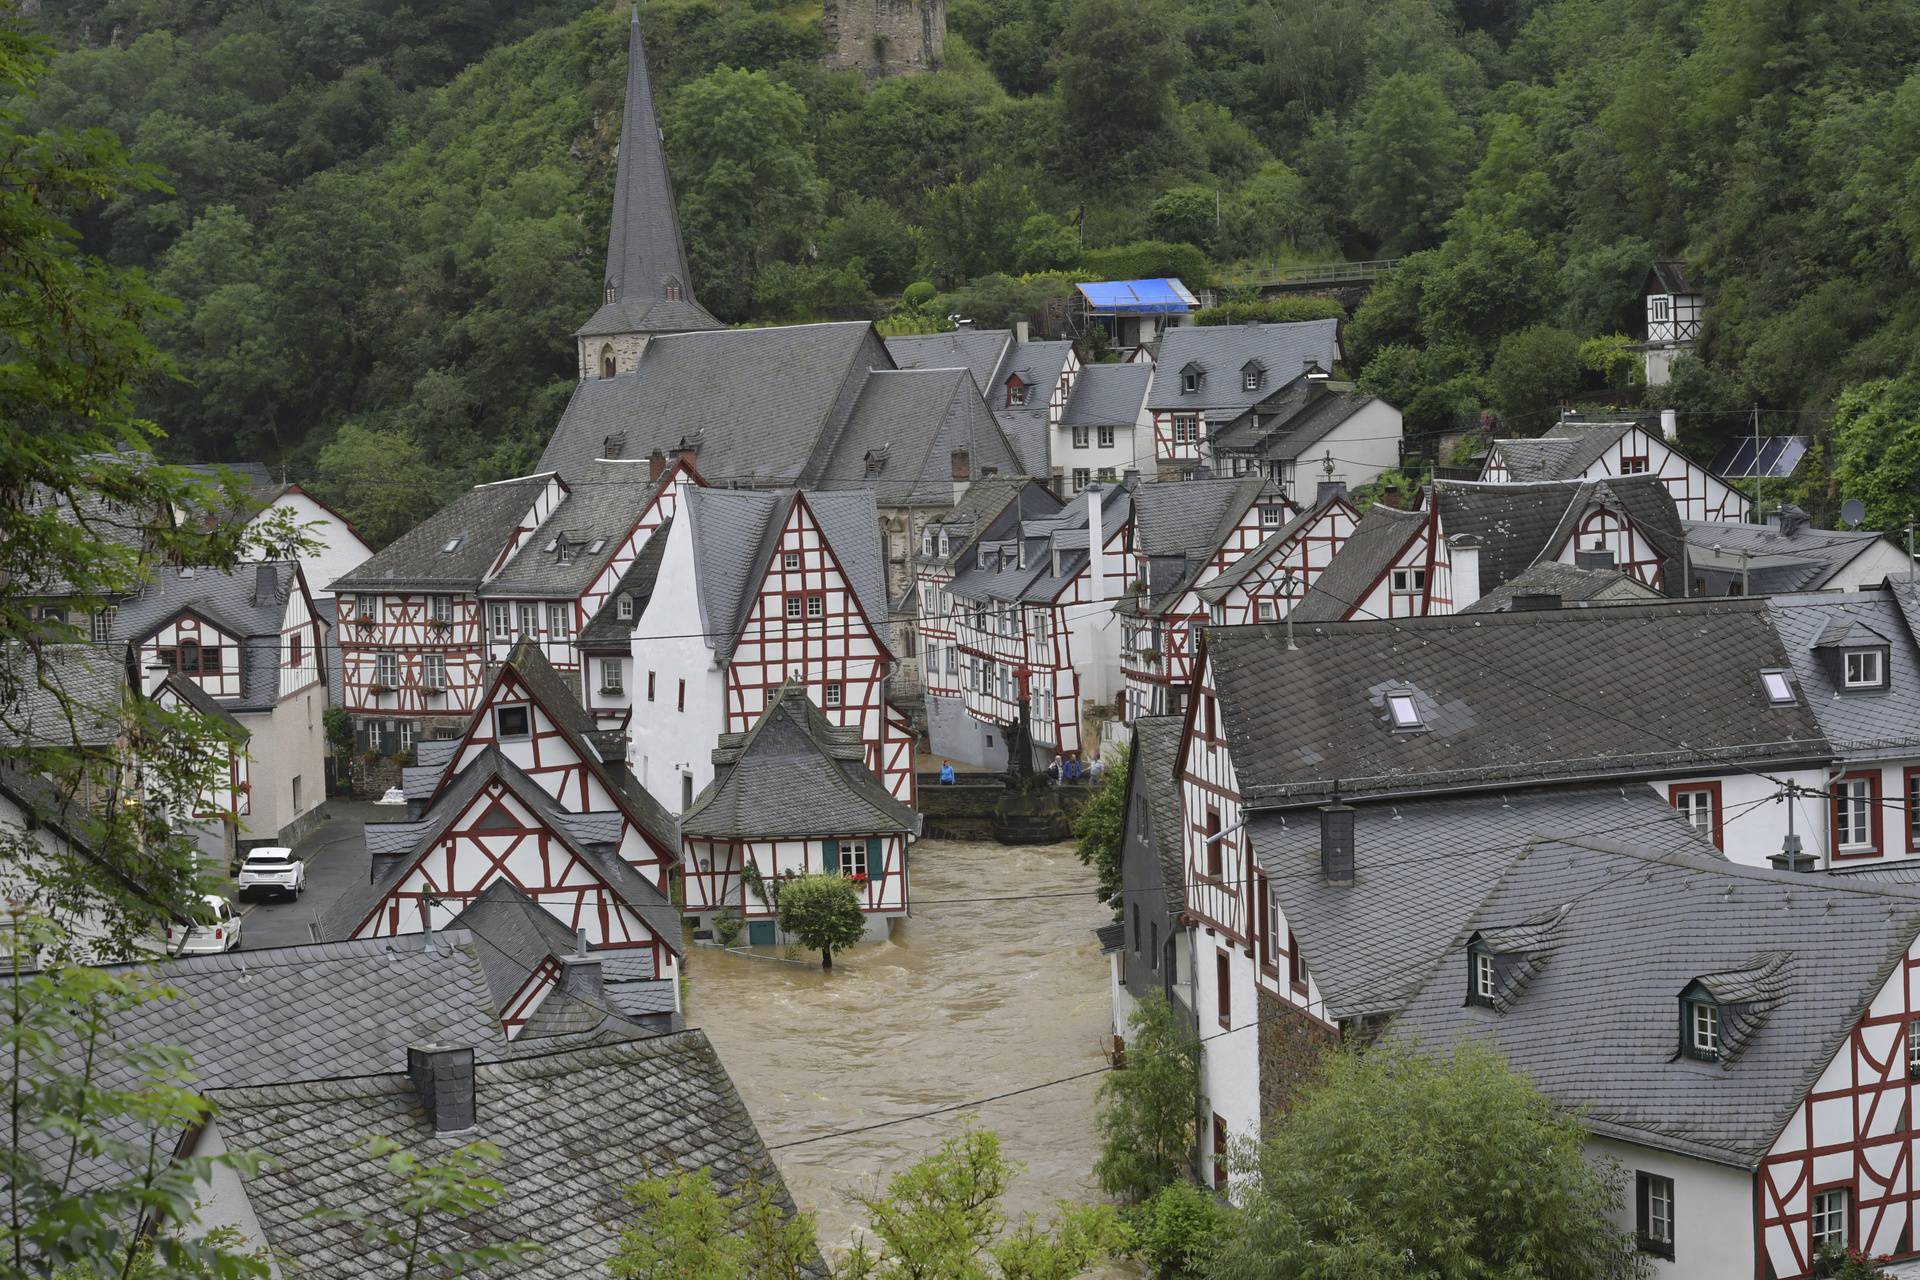 Floods in Rhineland-Palatinate